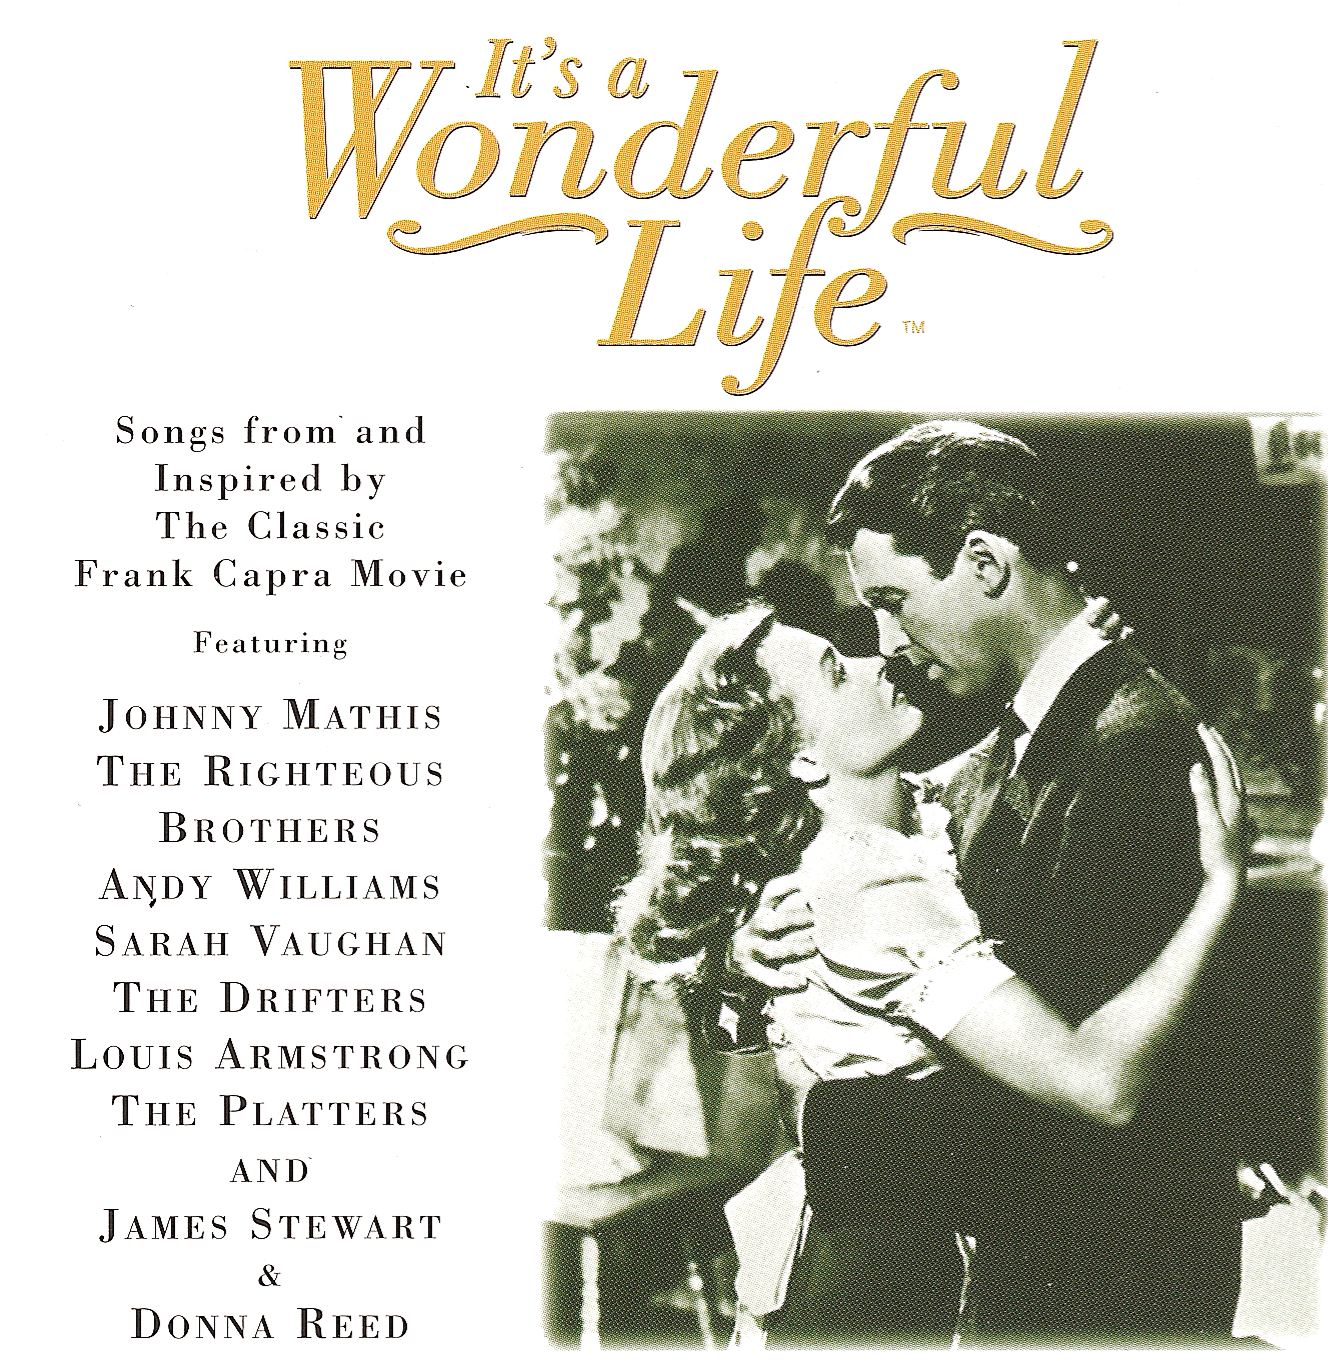 Wonderful life. Wonderful Life текст. Its a wonderful Life песня. Слова песни wonderful Life. It's a wonderful wonderful Life текст.